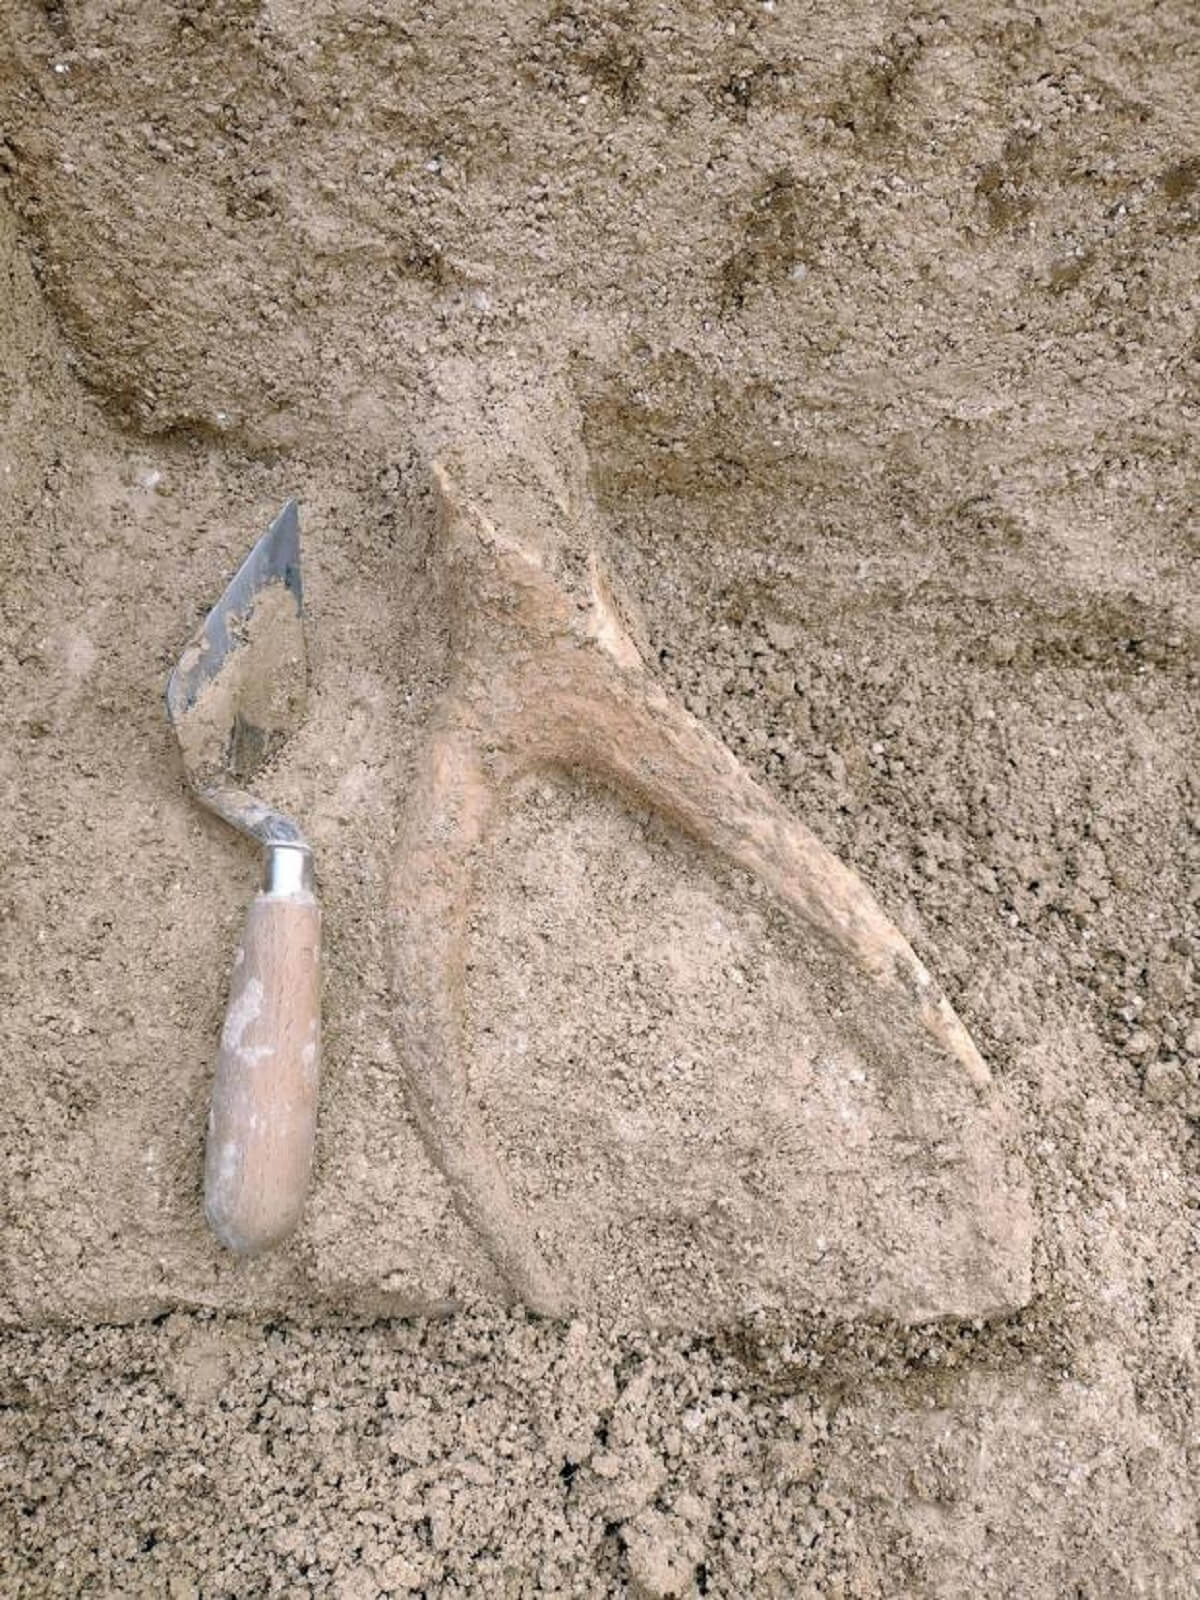 Increíbles hallazgos arqueológicos datados en 10,000 a.C. desenterrados a solo 8 millas de Stonehenge